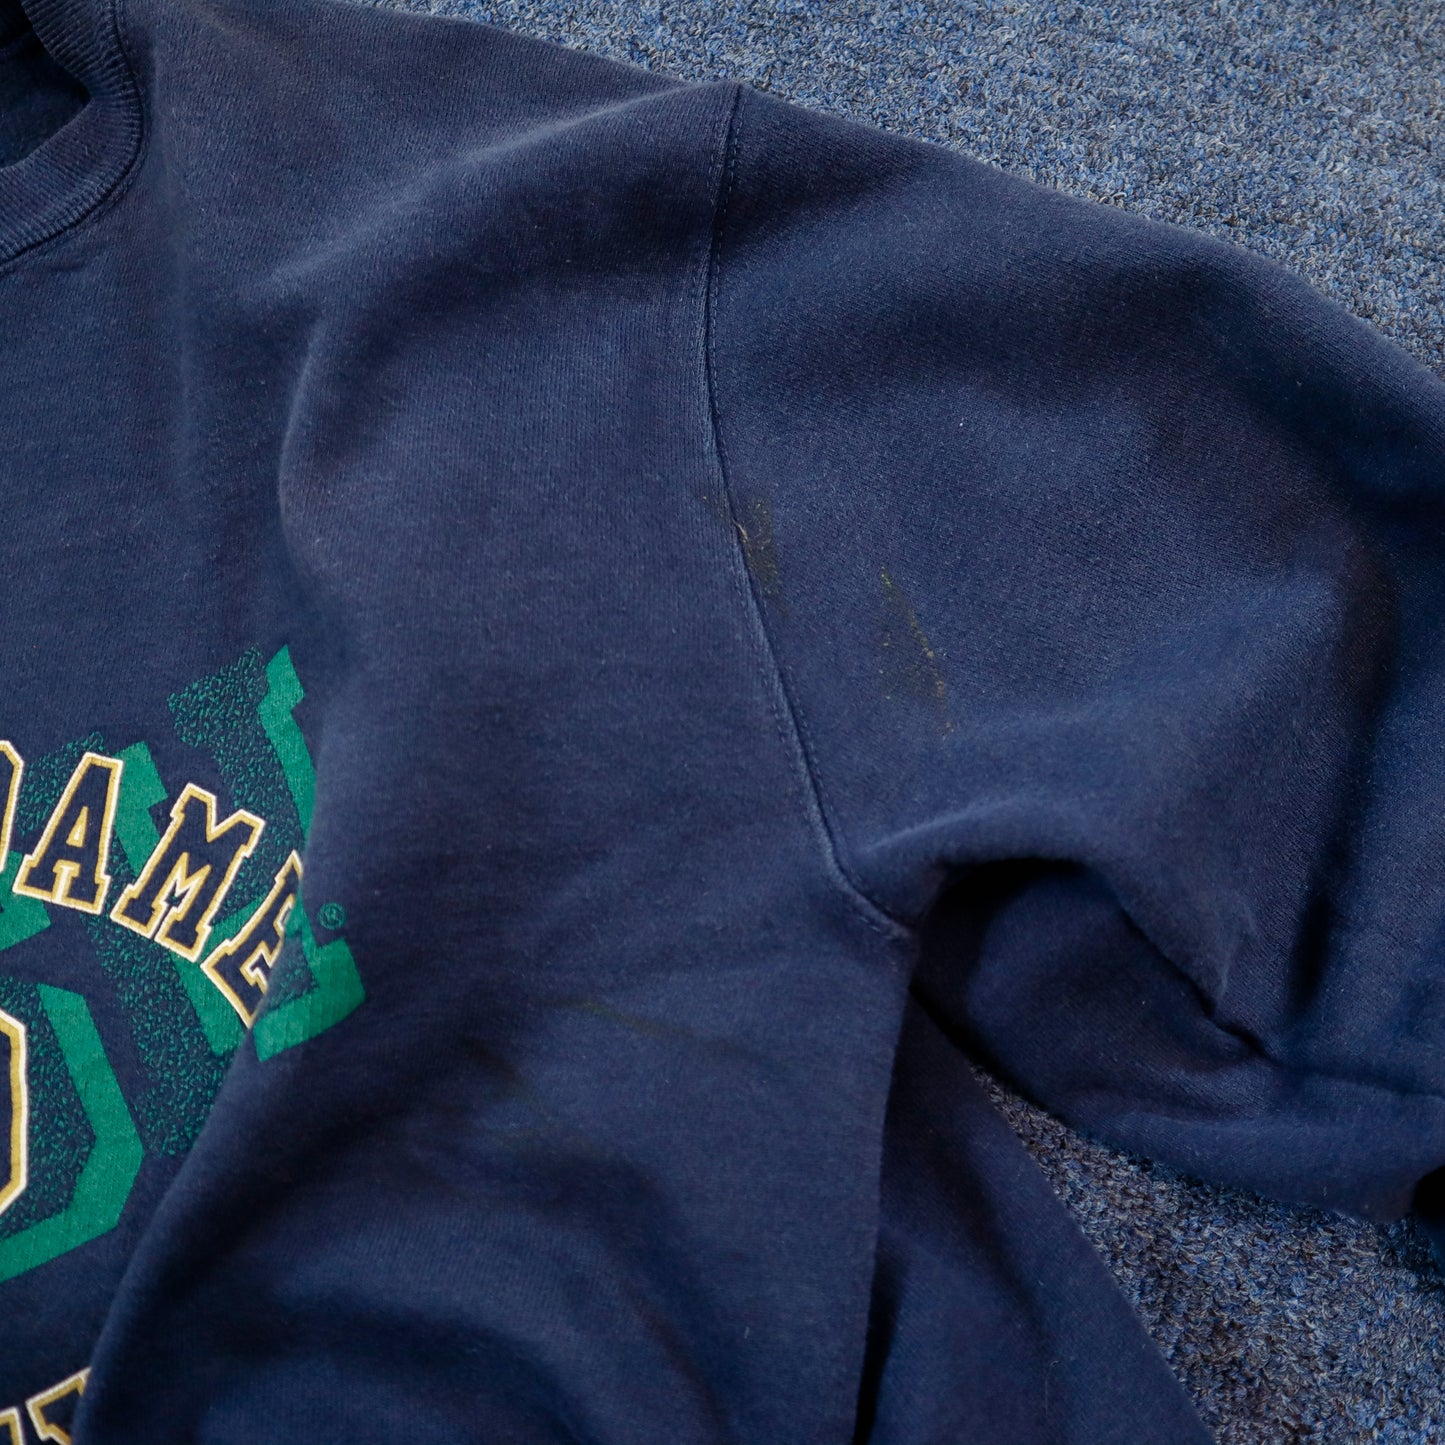 Vintage Champion Notre Dame Sweatshirt